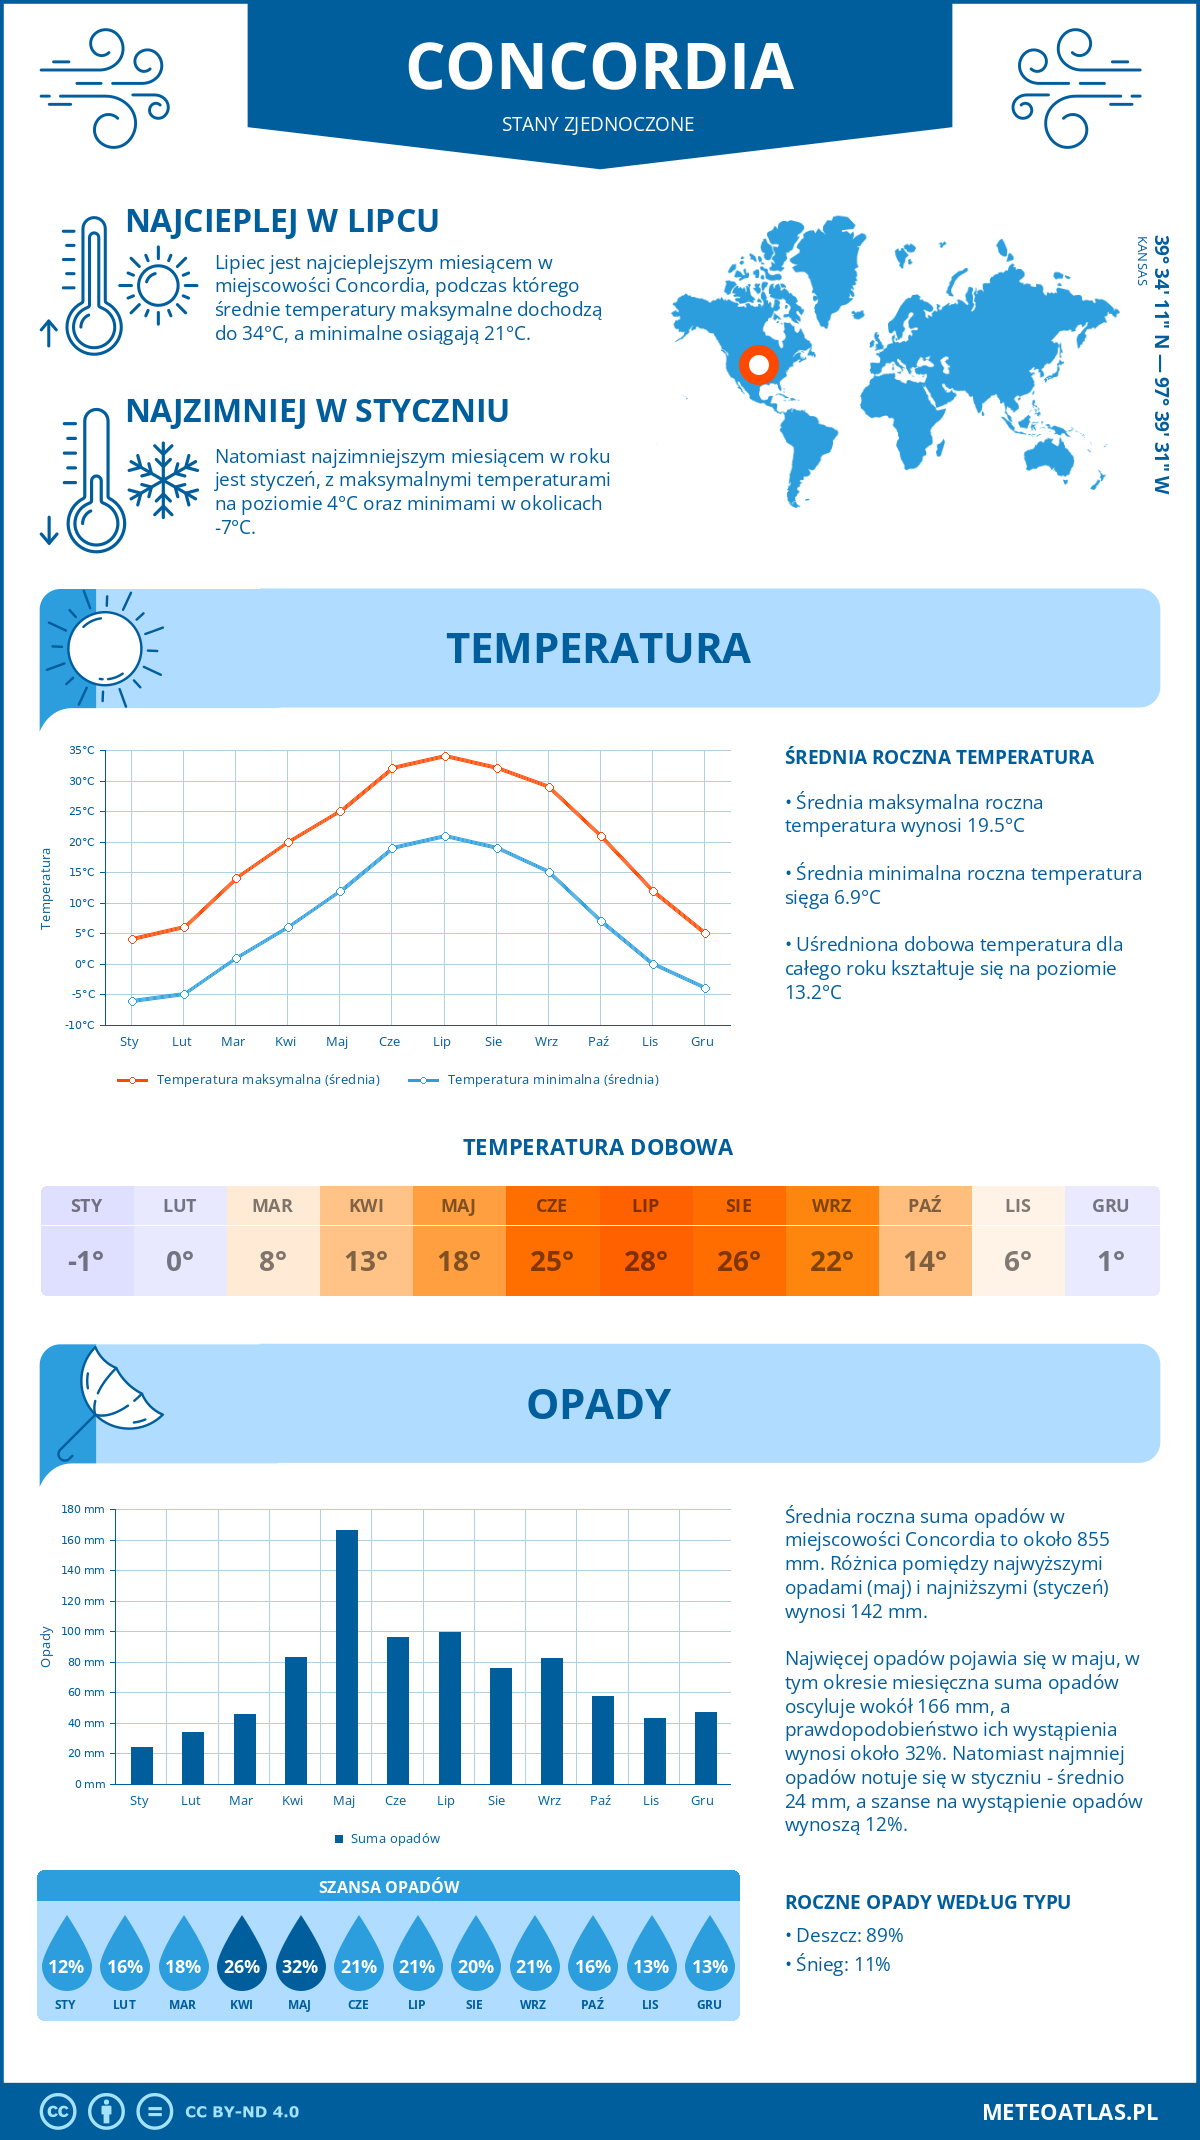 Pogoda Concordia (Stany Zjednoczone). Temperatura oraz opady.